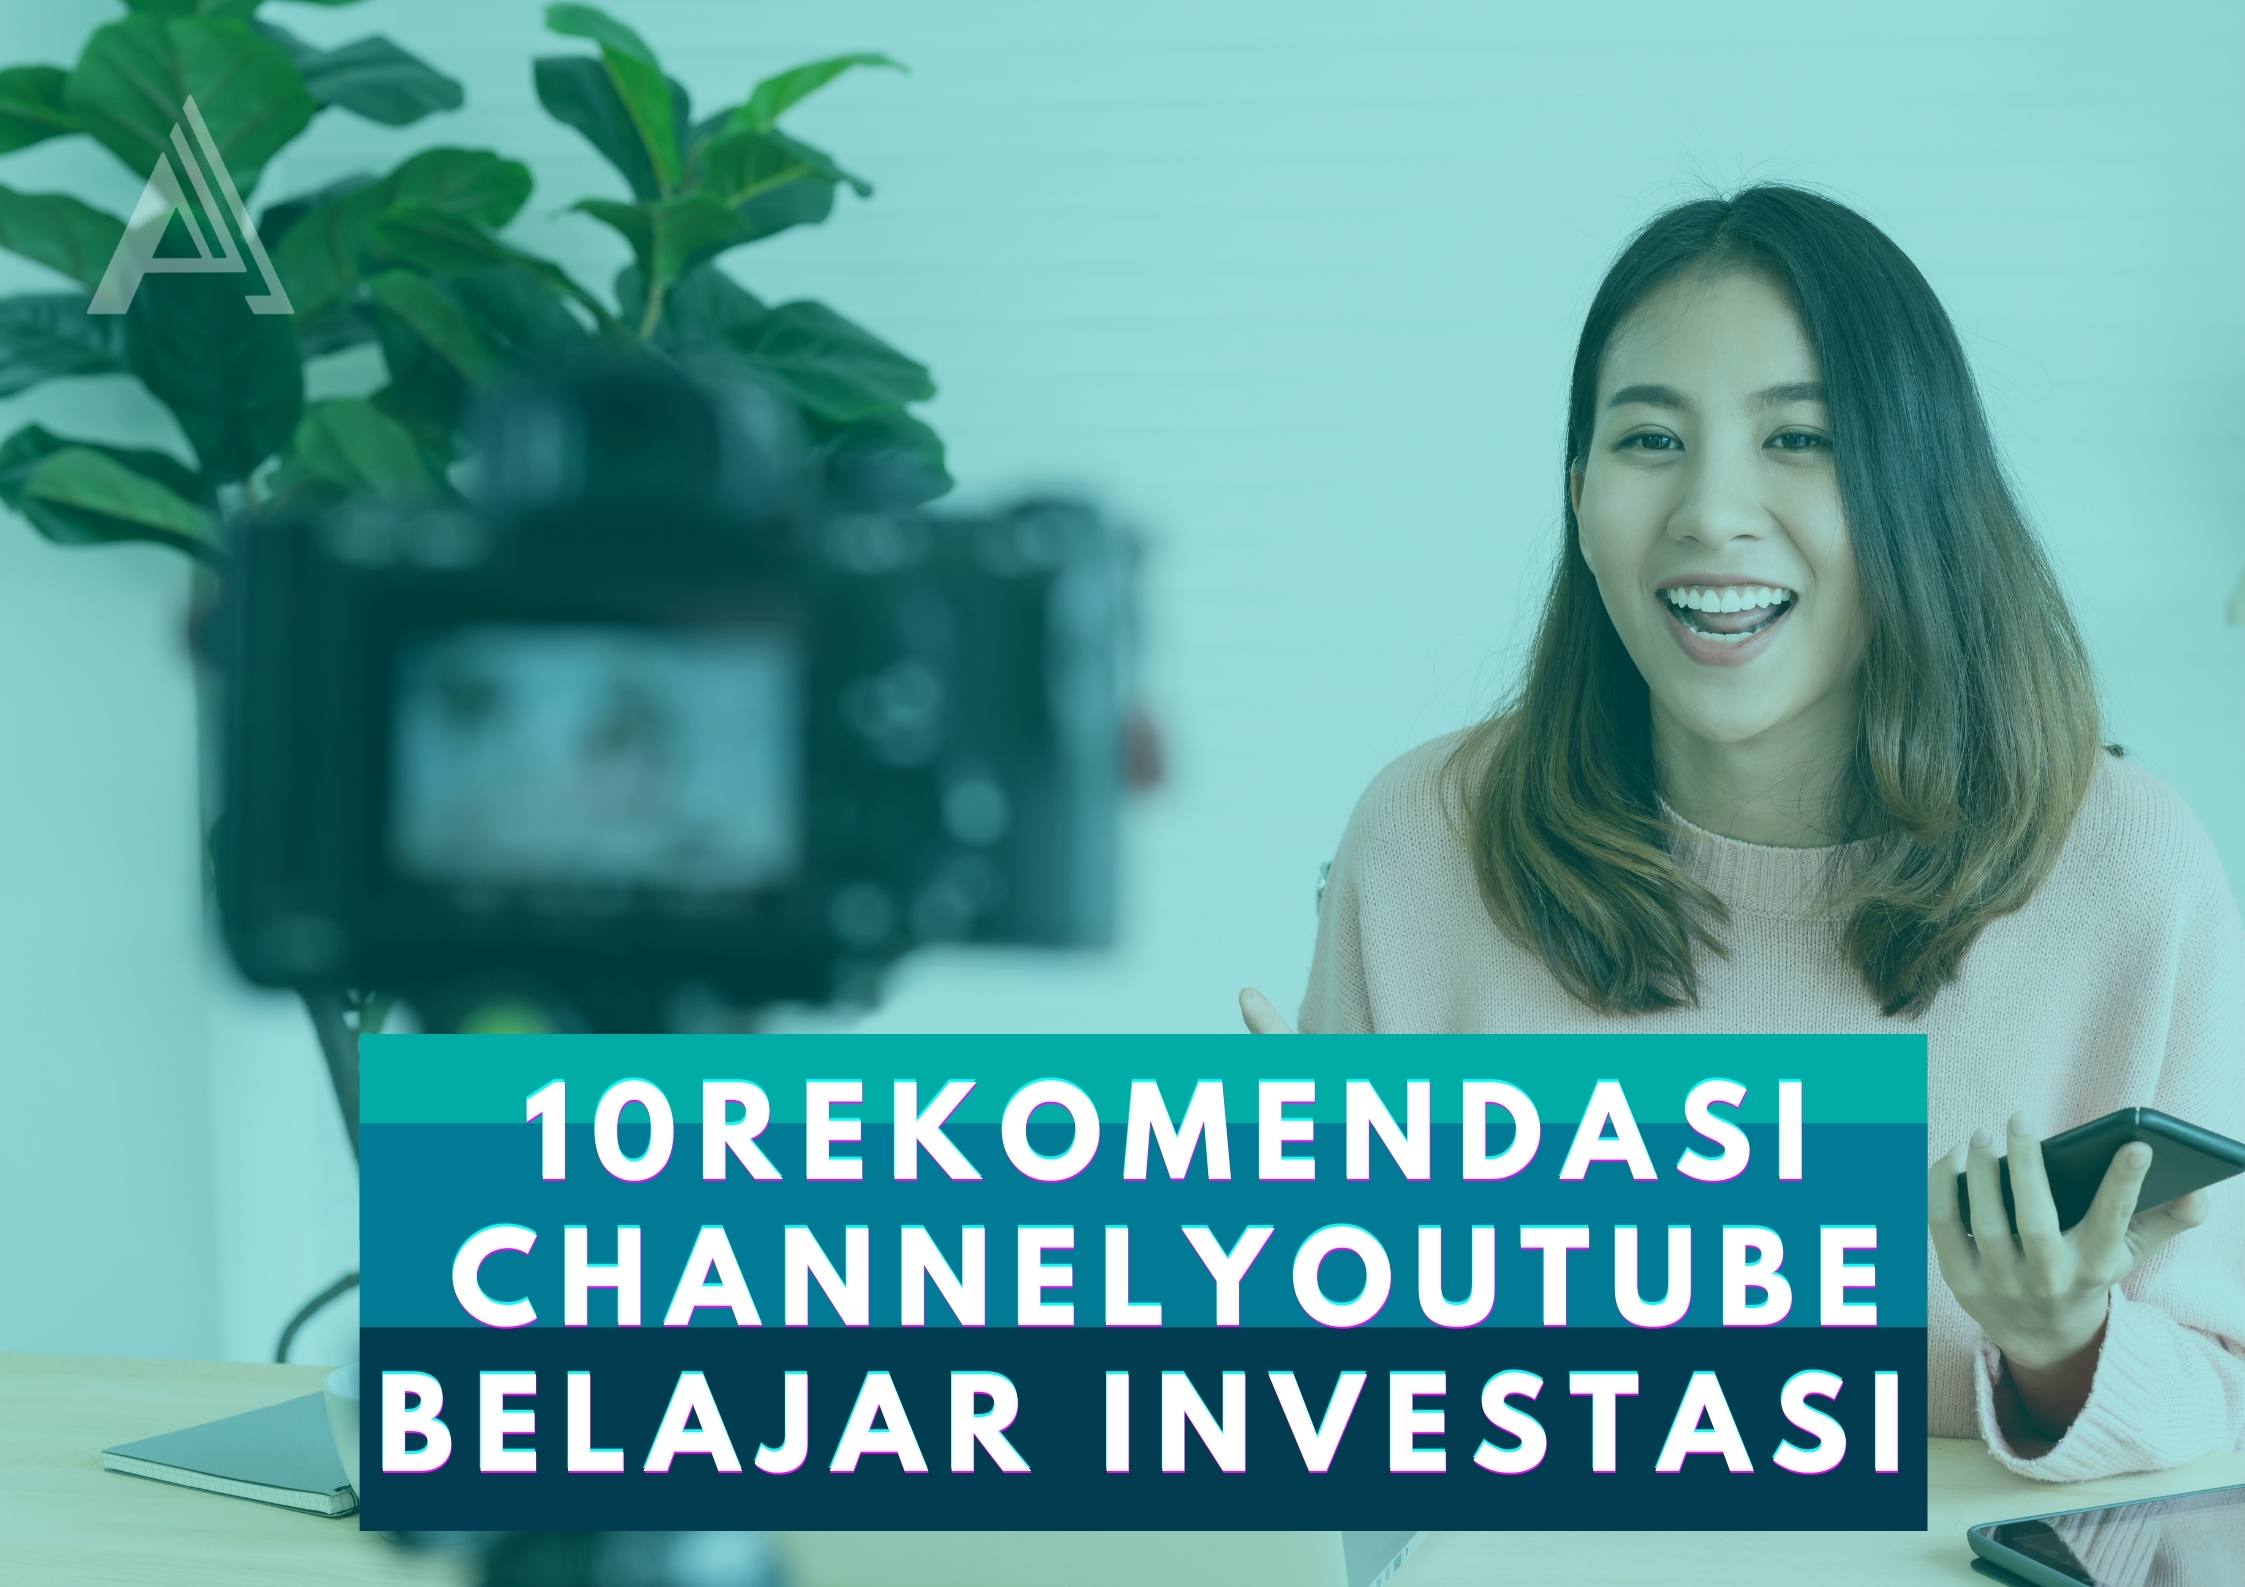 channel youtube belajar investasi